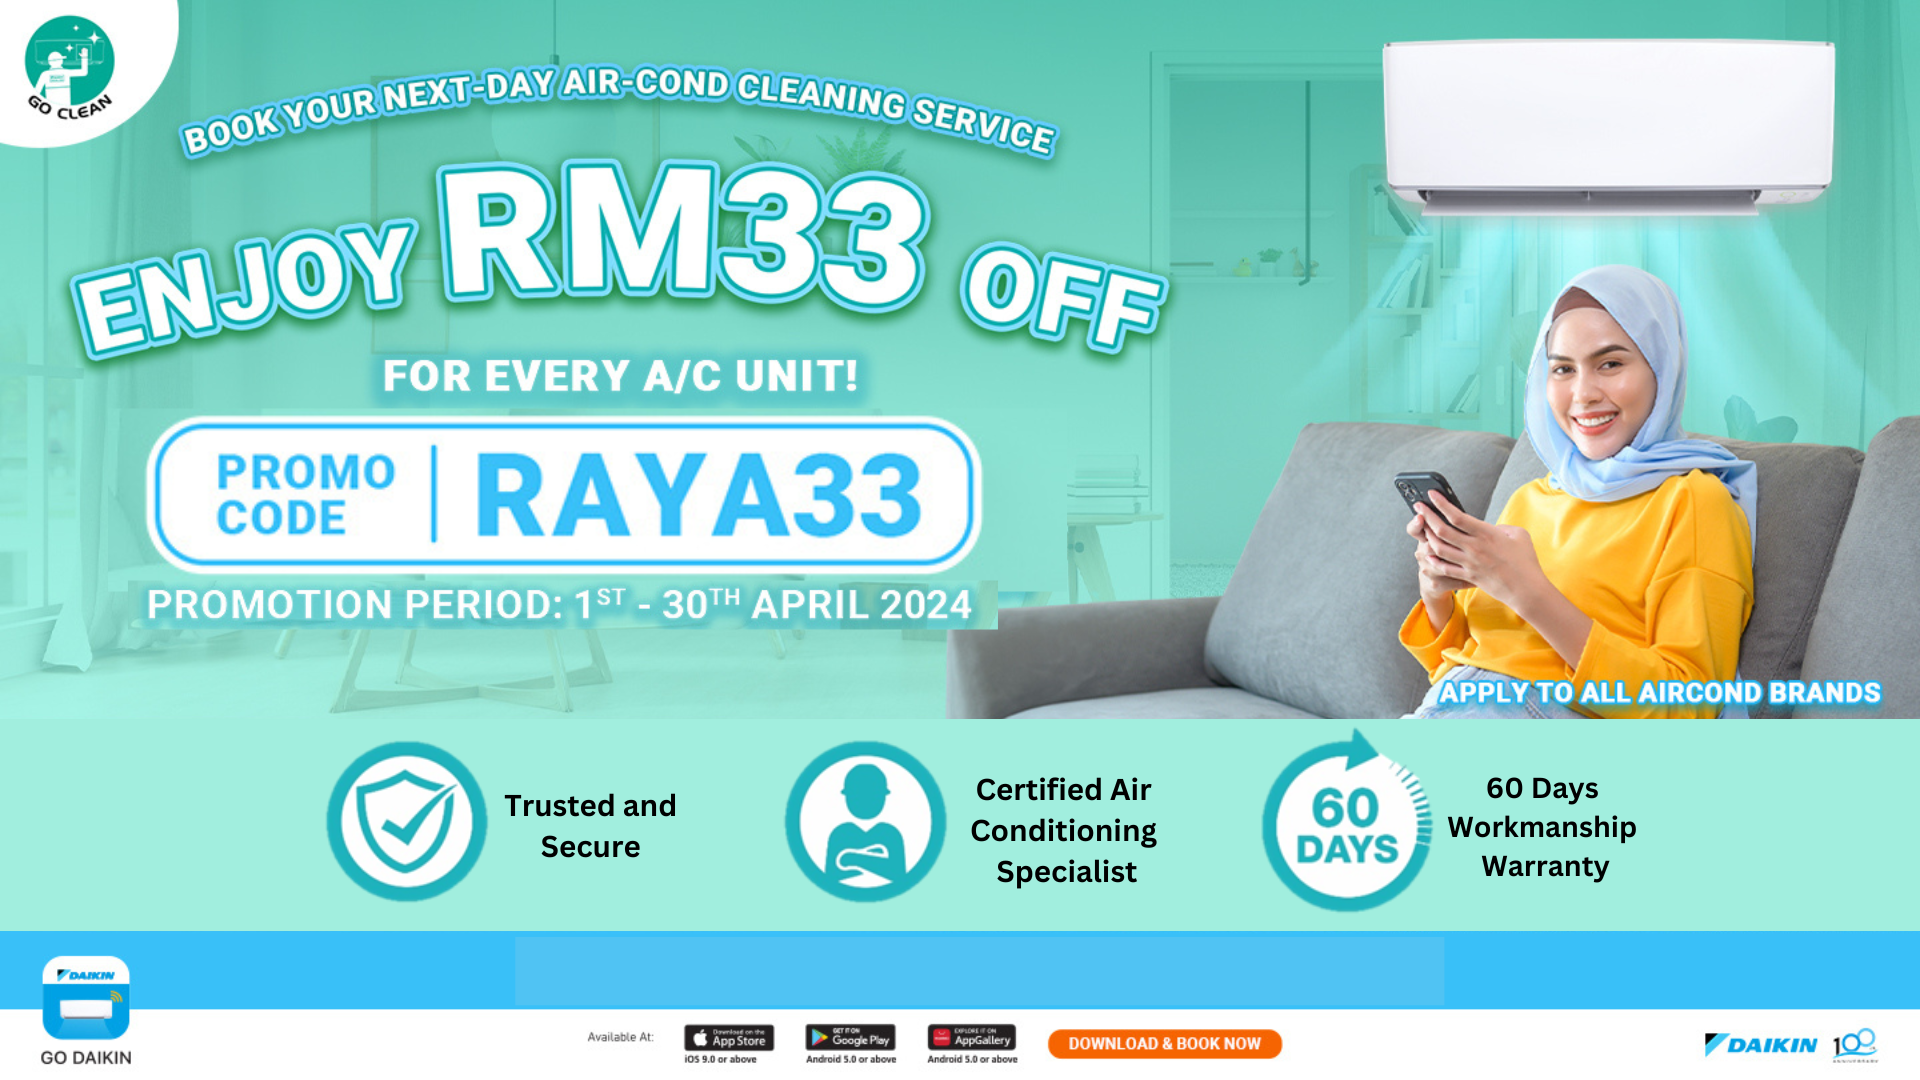 RAYA33 Get RM33 Off For Every Unit | Daikin Malaysia